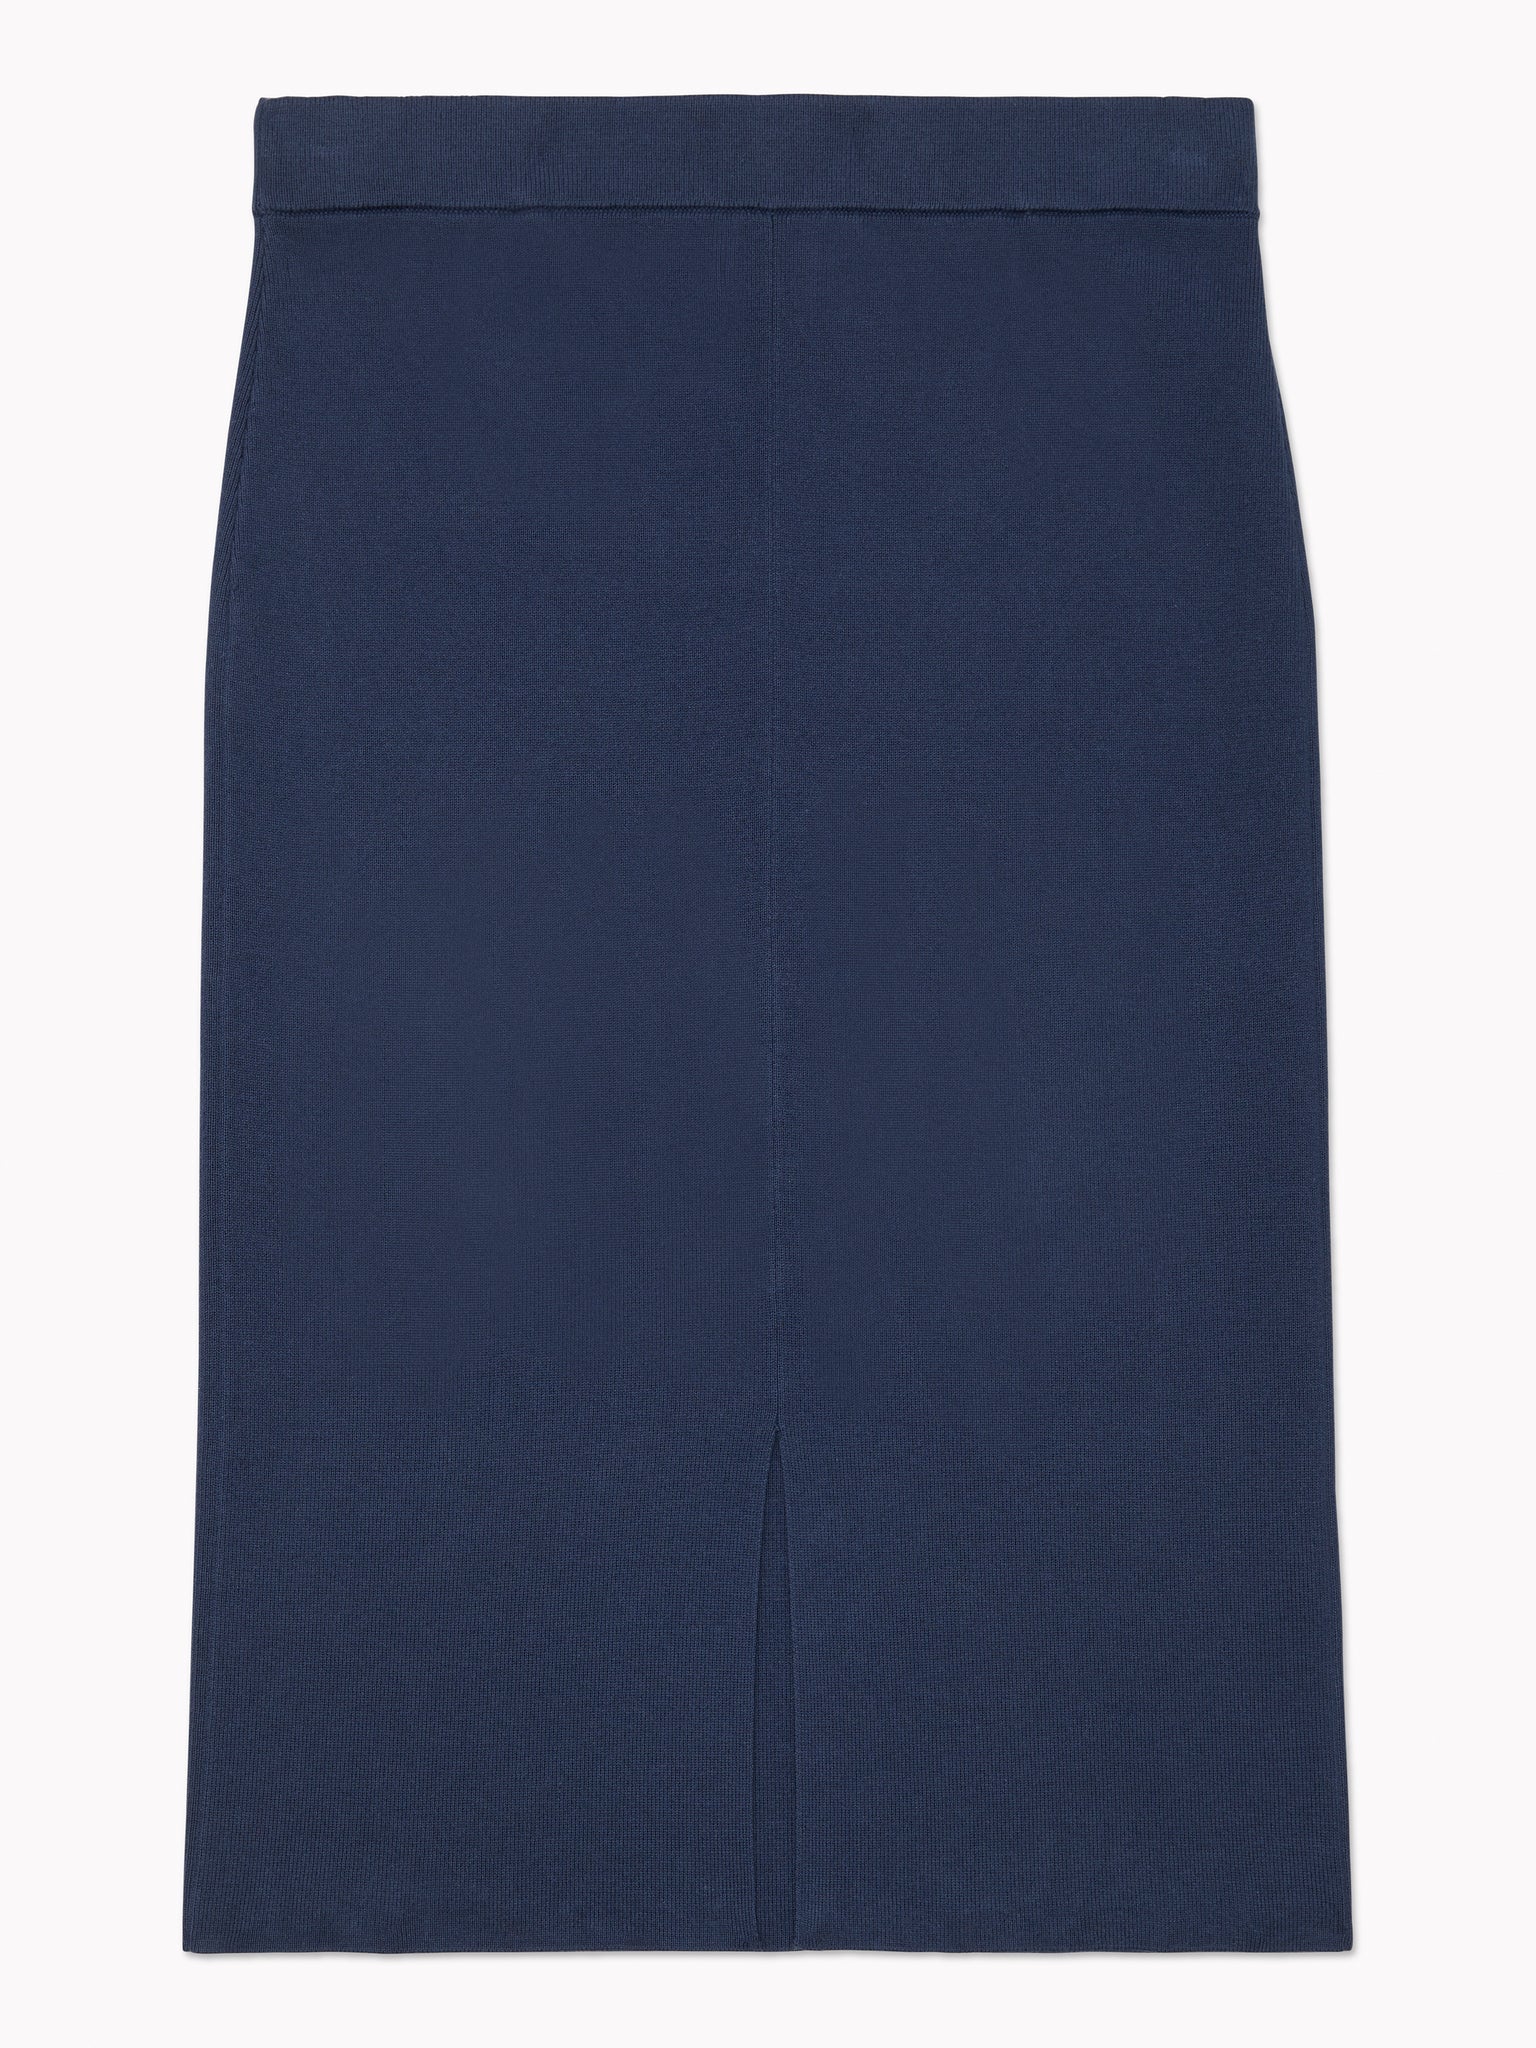 Ribbed Bodycon Skirt (Womens) - Cobalt Saphire